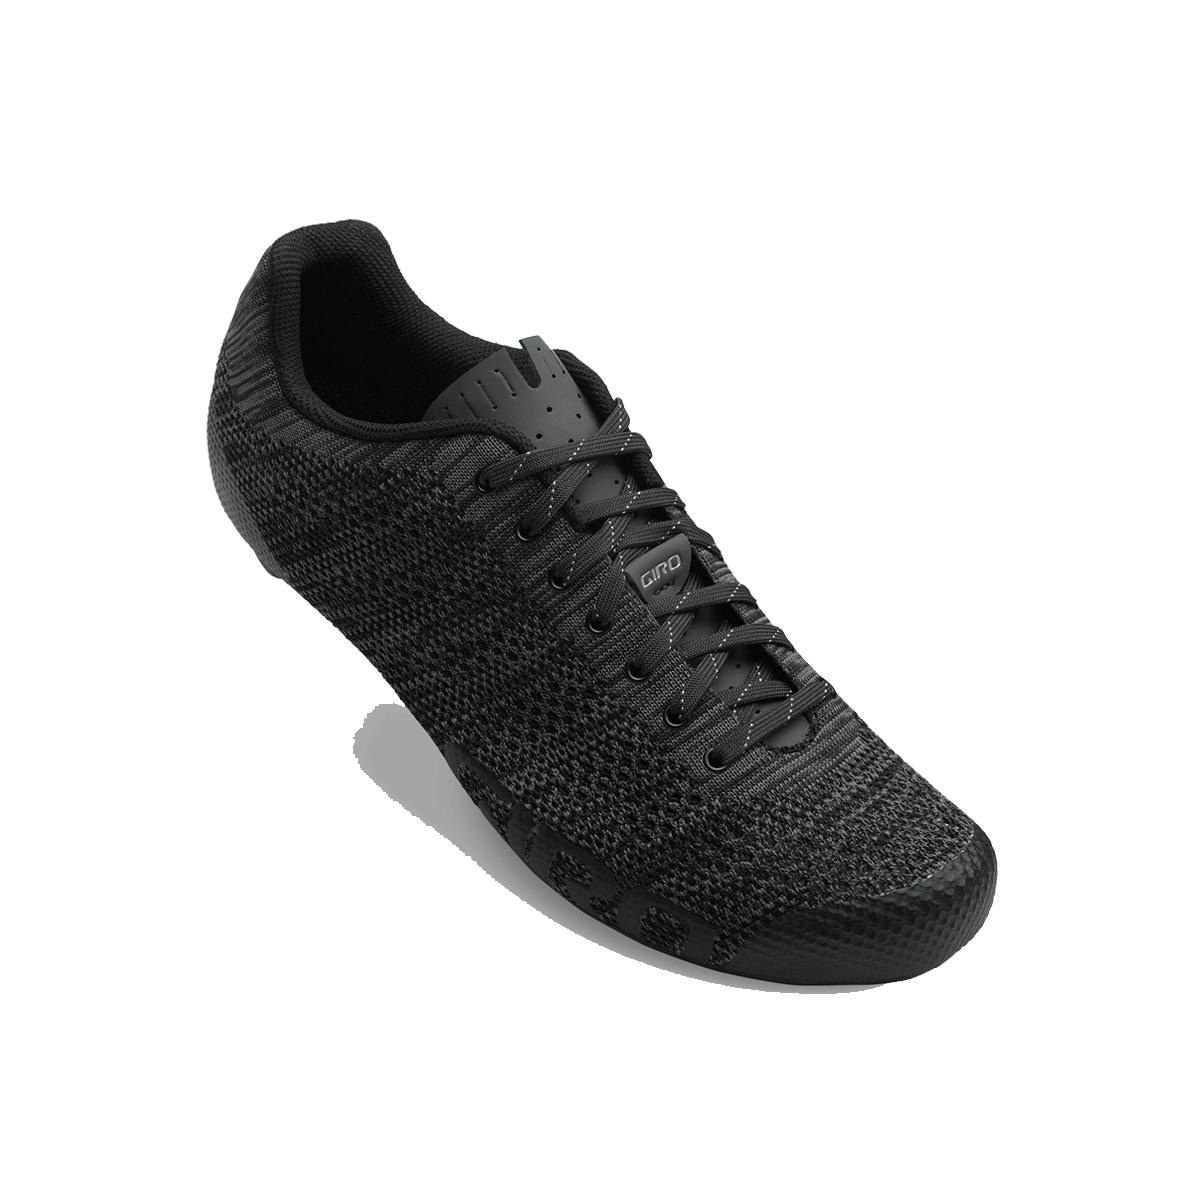 GIRO Empire E70 Knit Road Cycling Shoes 2018 Black/Charcoal Heather 41